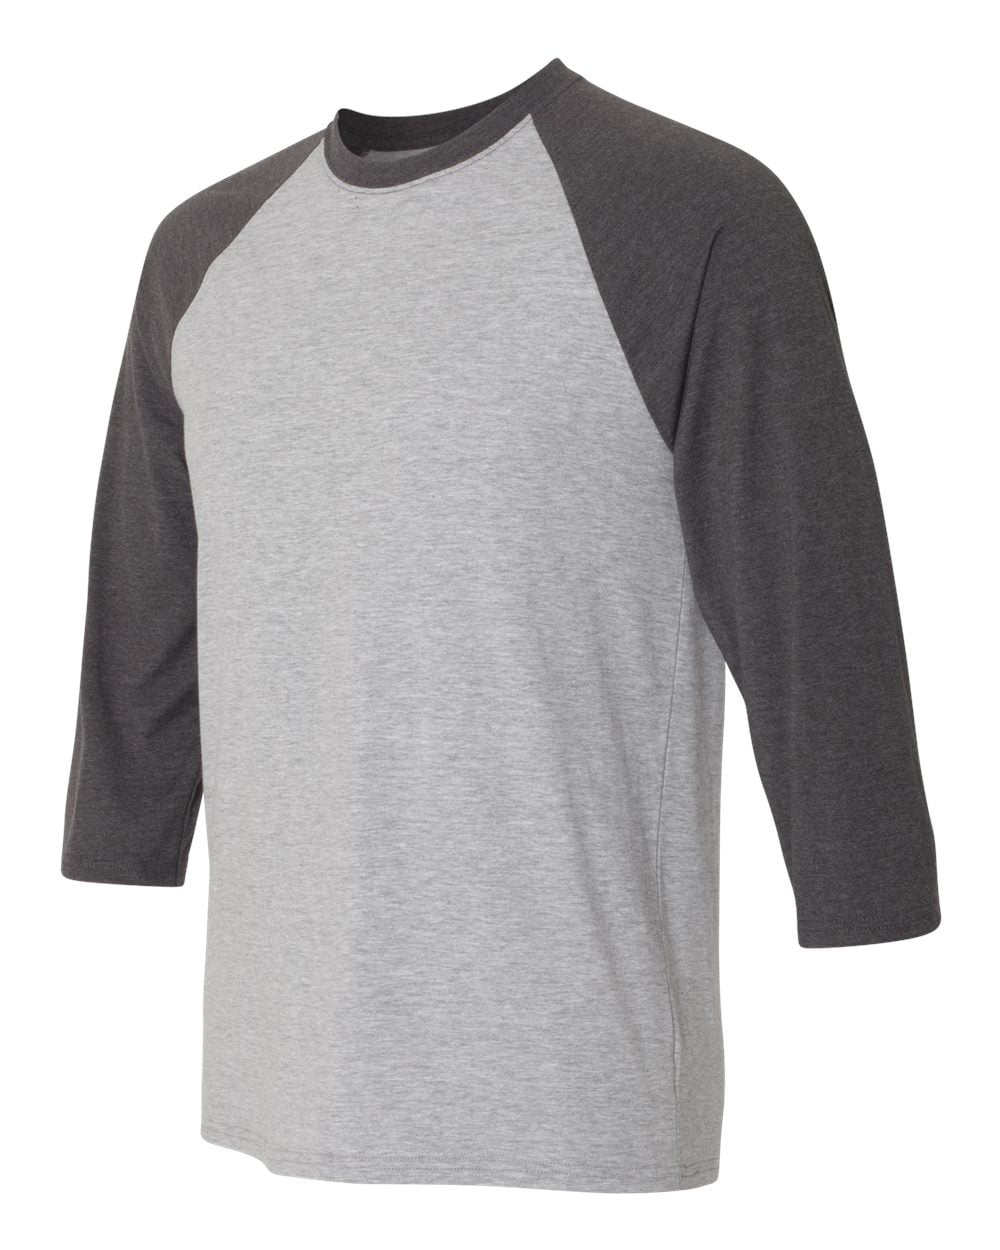 TSLA Kids 3/4 Sleeve Baseball Jersey Shirts Casual Dynamic Cotton T-Shirts Quarter Sleeve Raglan Tops